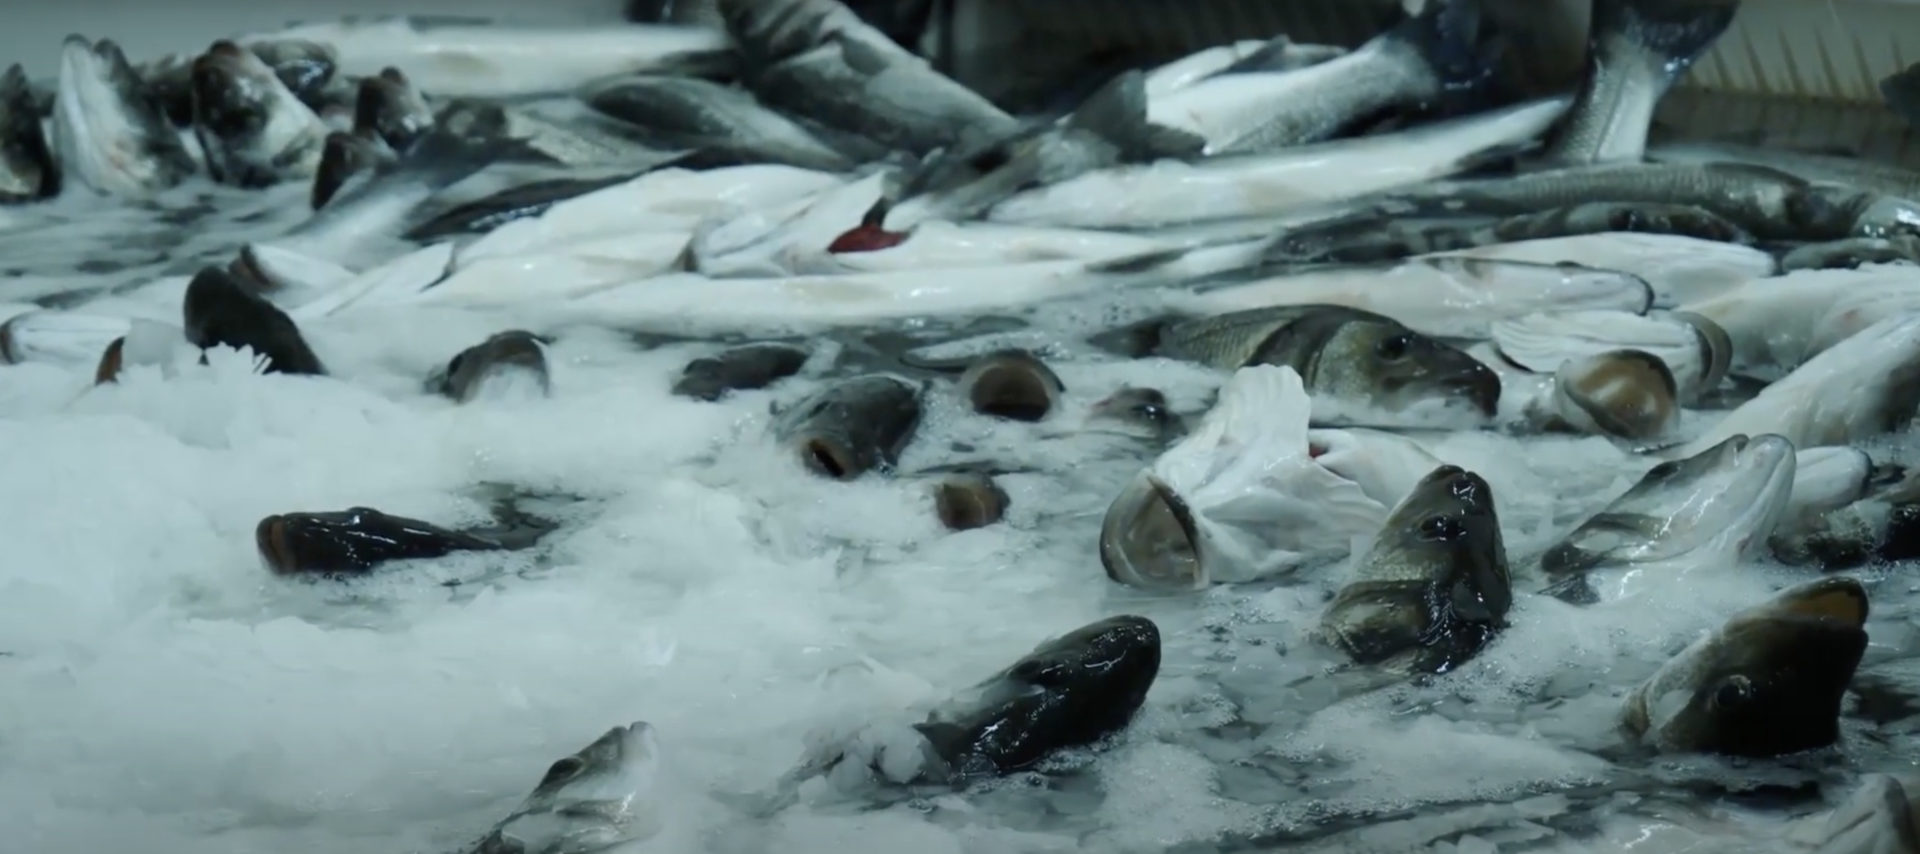 Ocean desolation: how fish farm pollution is killing marine life in Greece 2